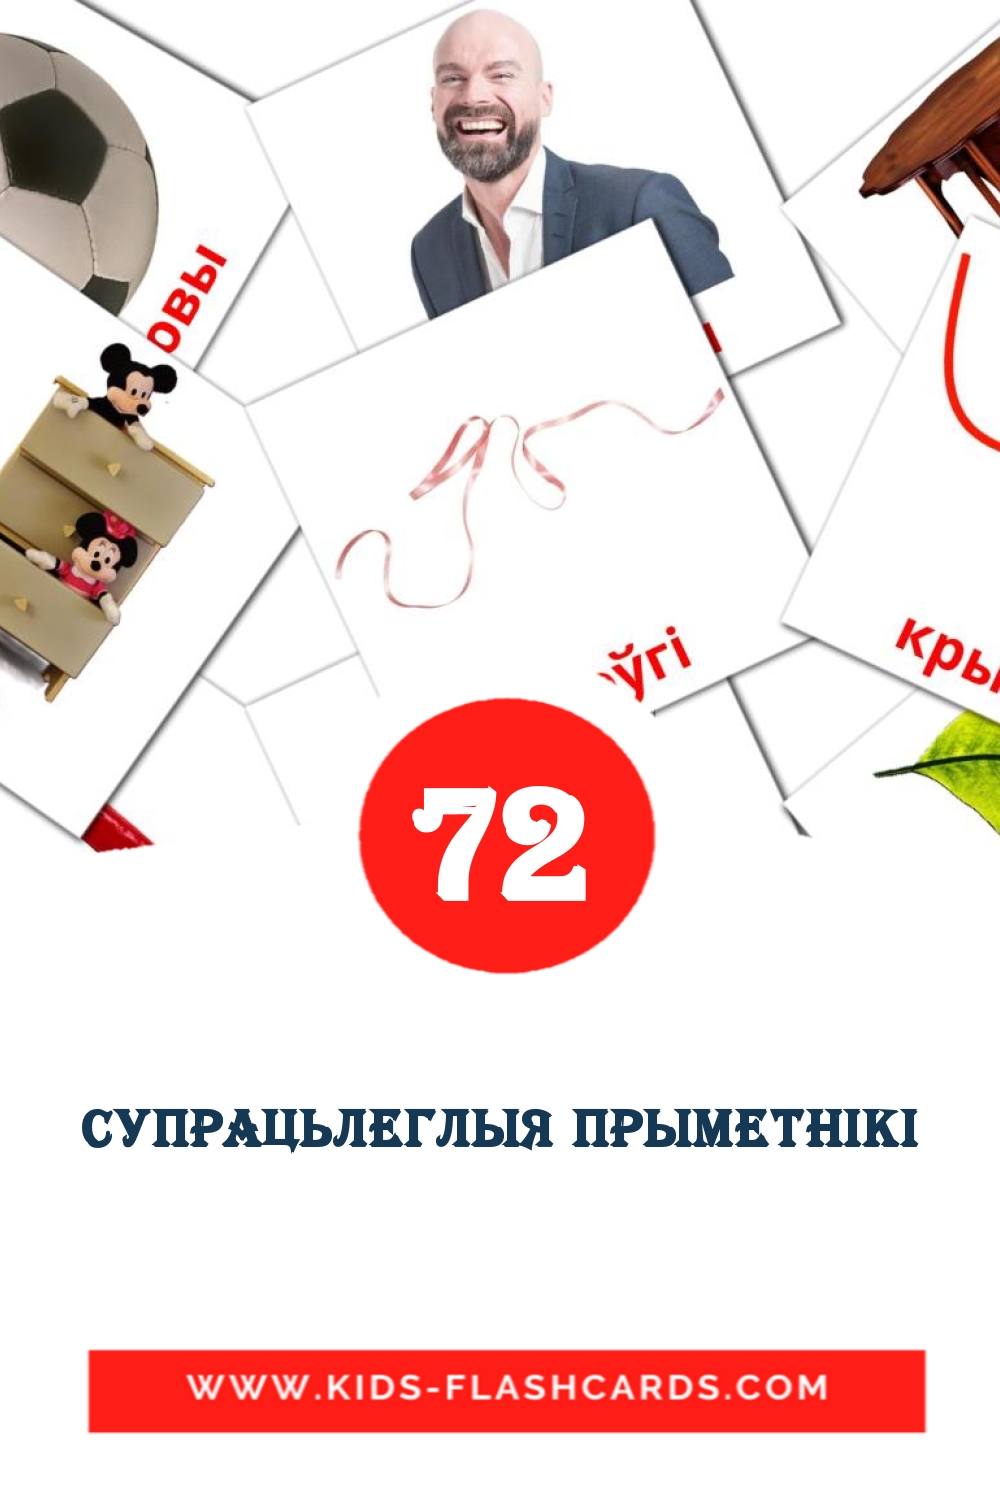 72 carte illustrate di супрацьлеглыя прыметнікі per la scuola materna in bielorusso